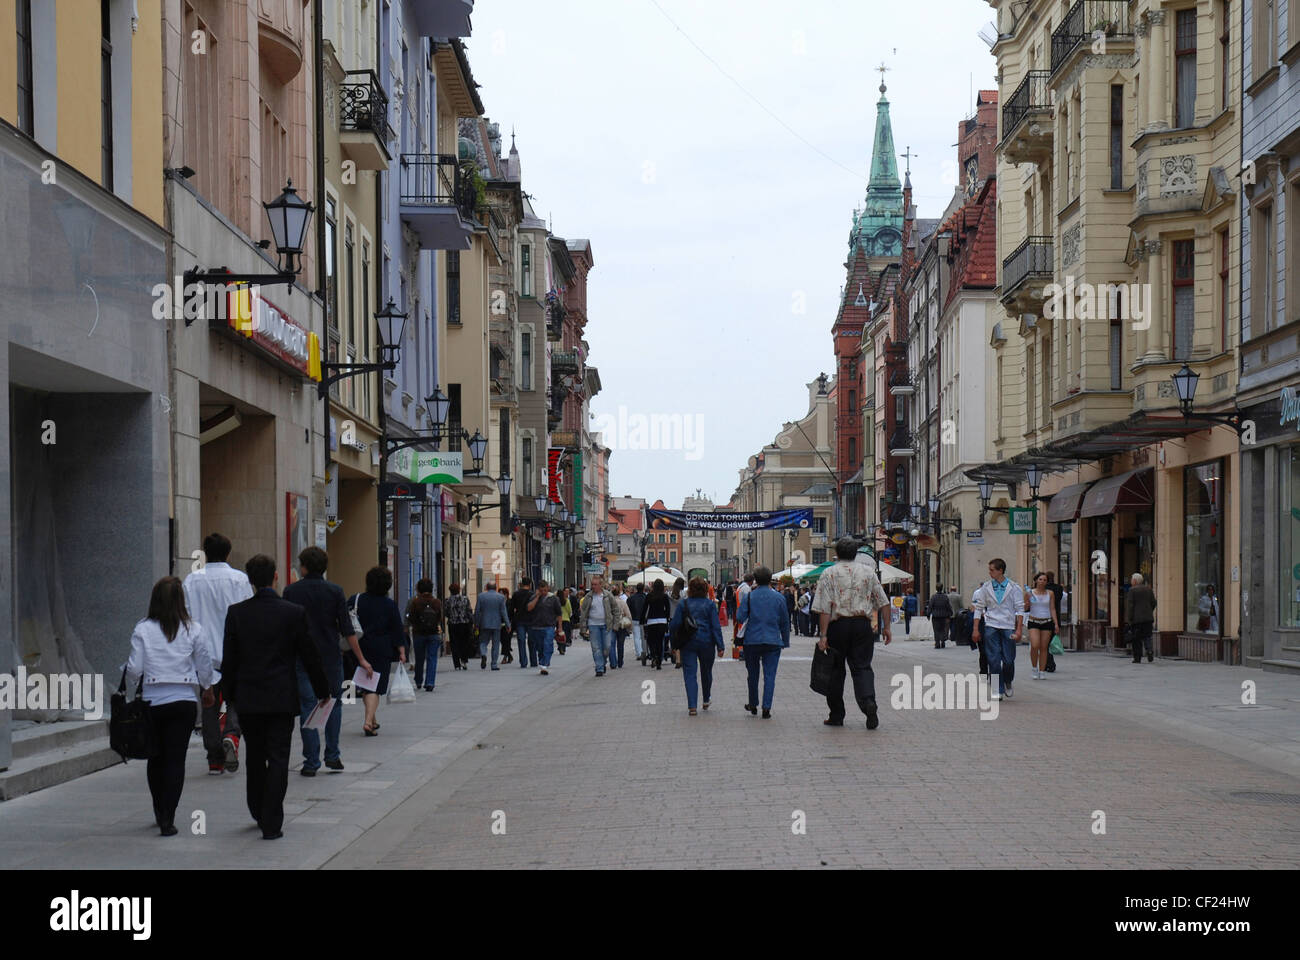 Pedestrian precinct in the old town of Torun. Stock Photo